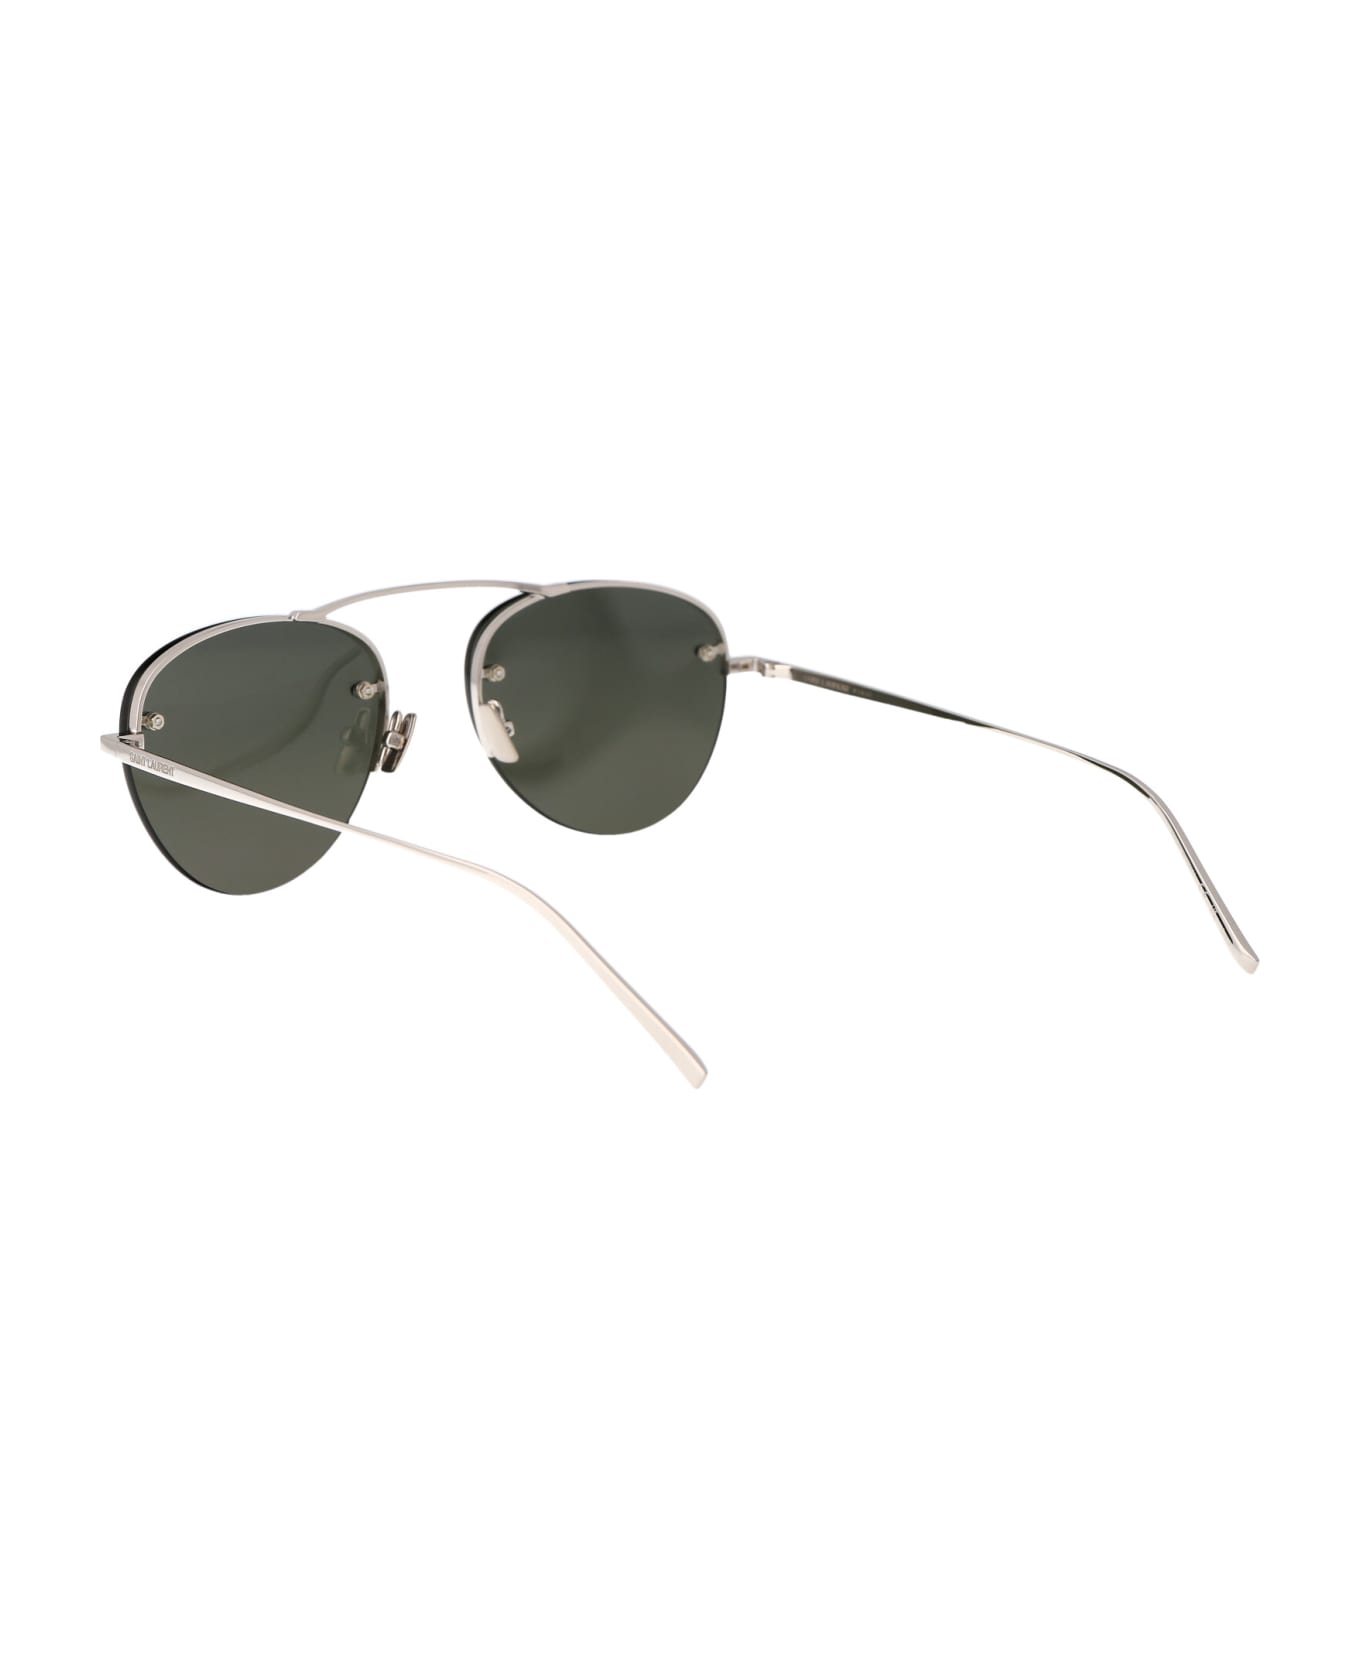 Saint Laurent Eyewear Sl 575 Sunglasses - 002 SILVER SILVER GREY サングラス